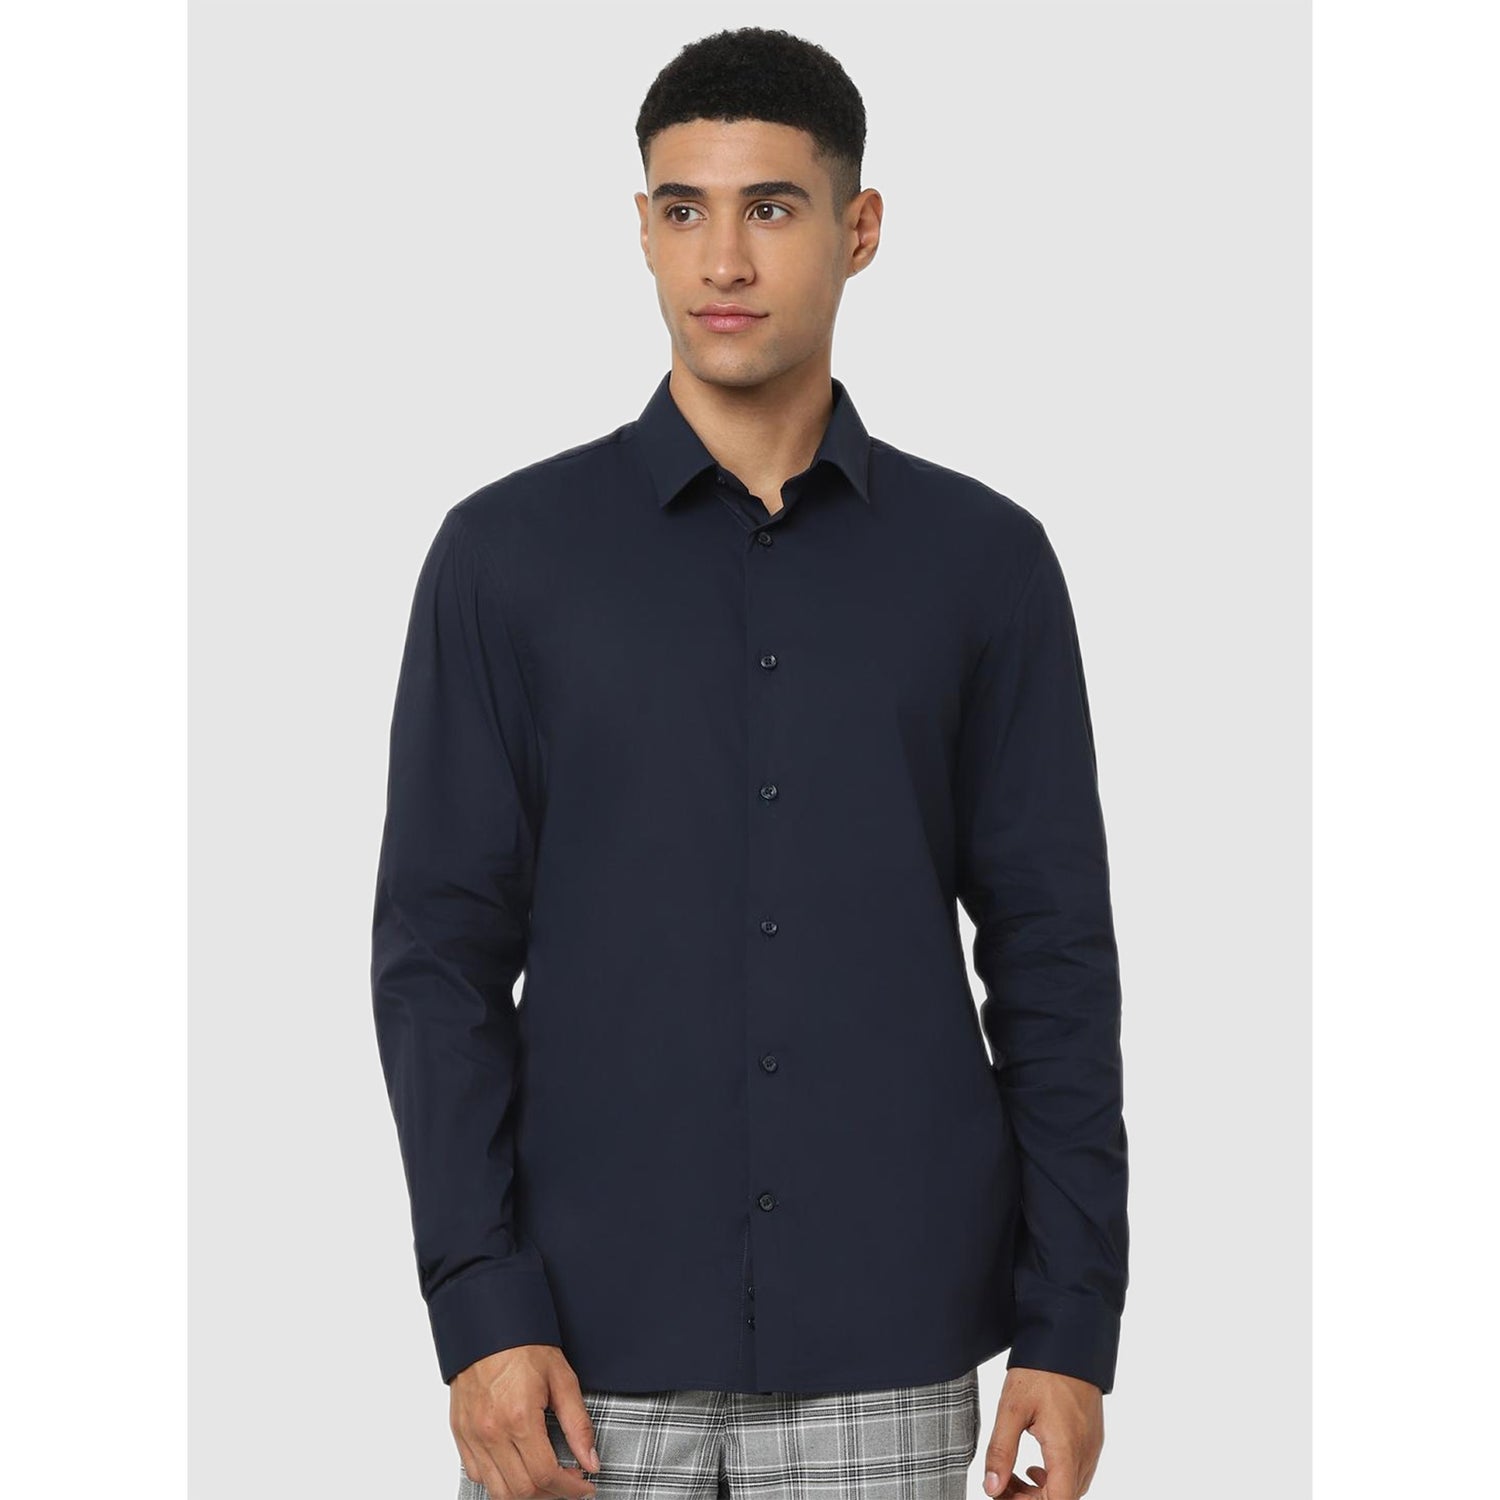 Navy Blue Classic Casual Long Sleeve Collar Regular Fit Shirt (MASANTAL)